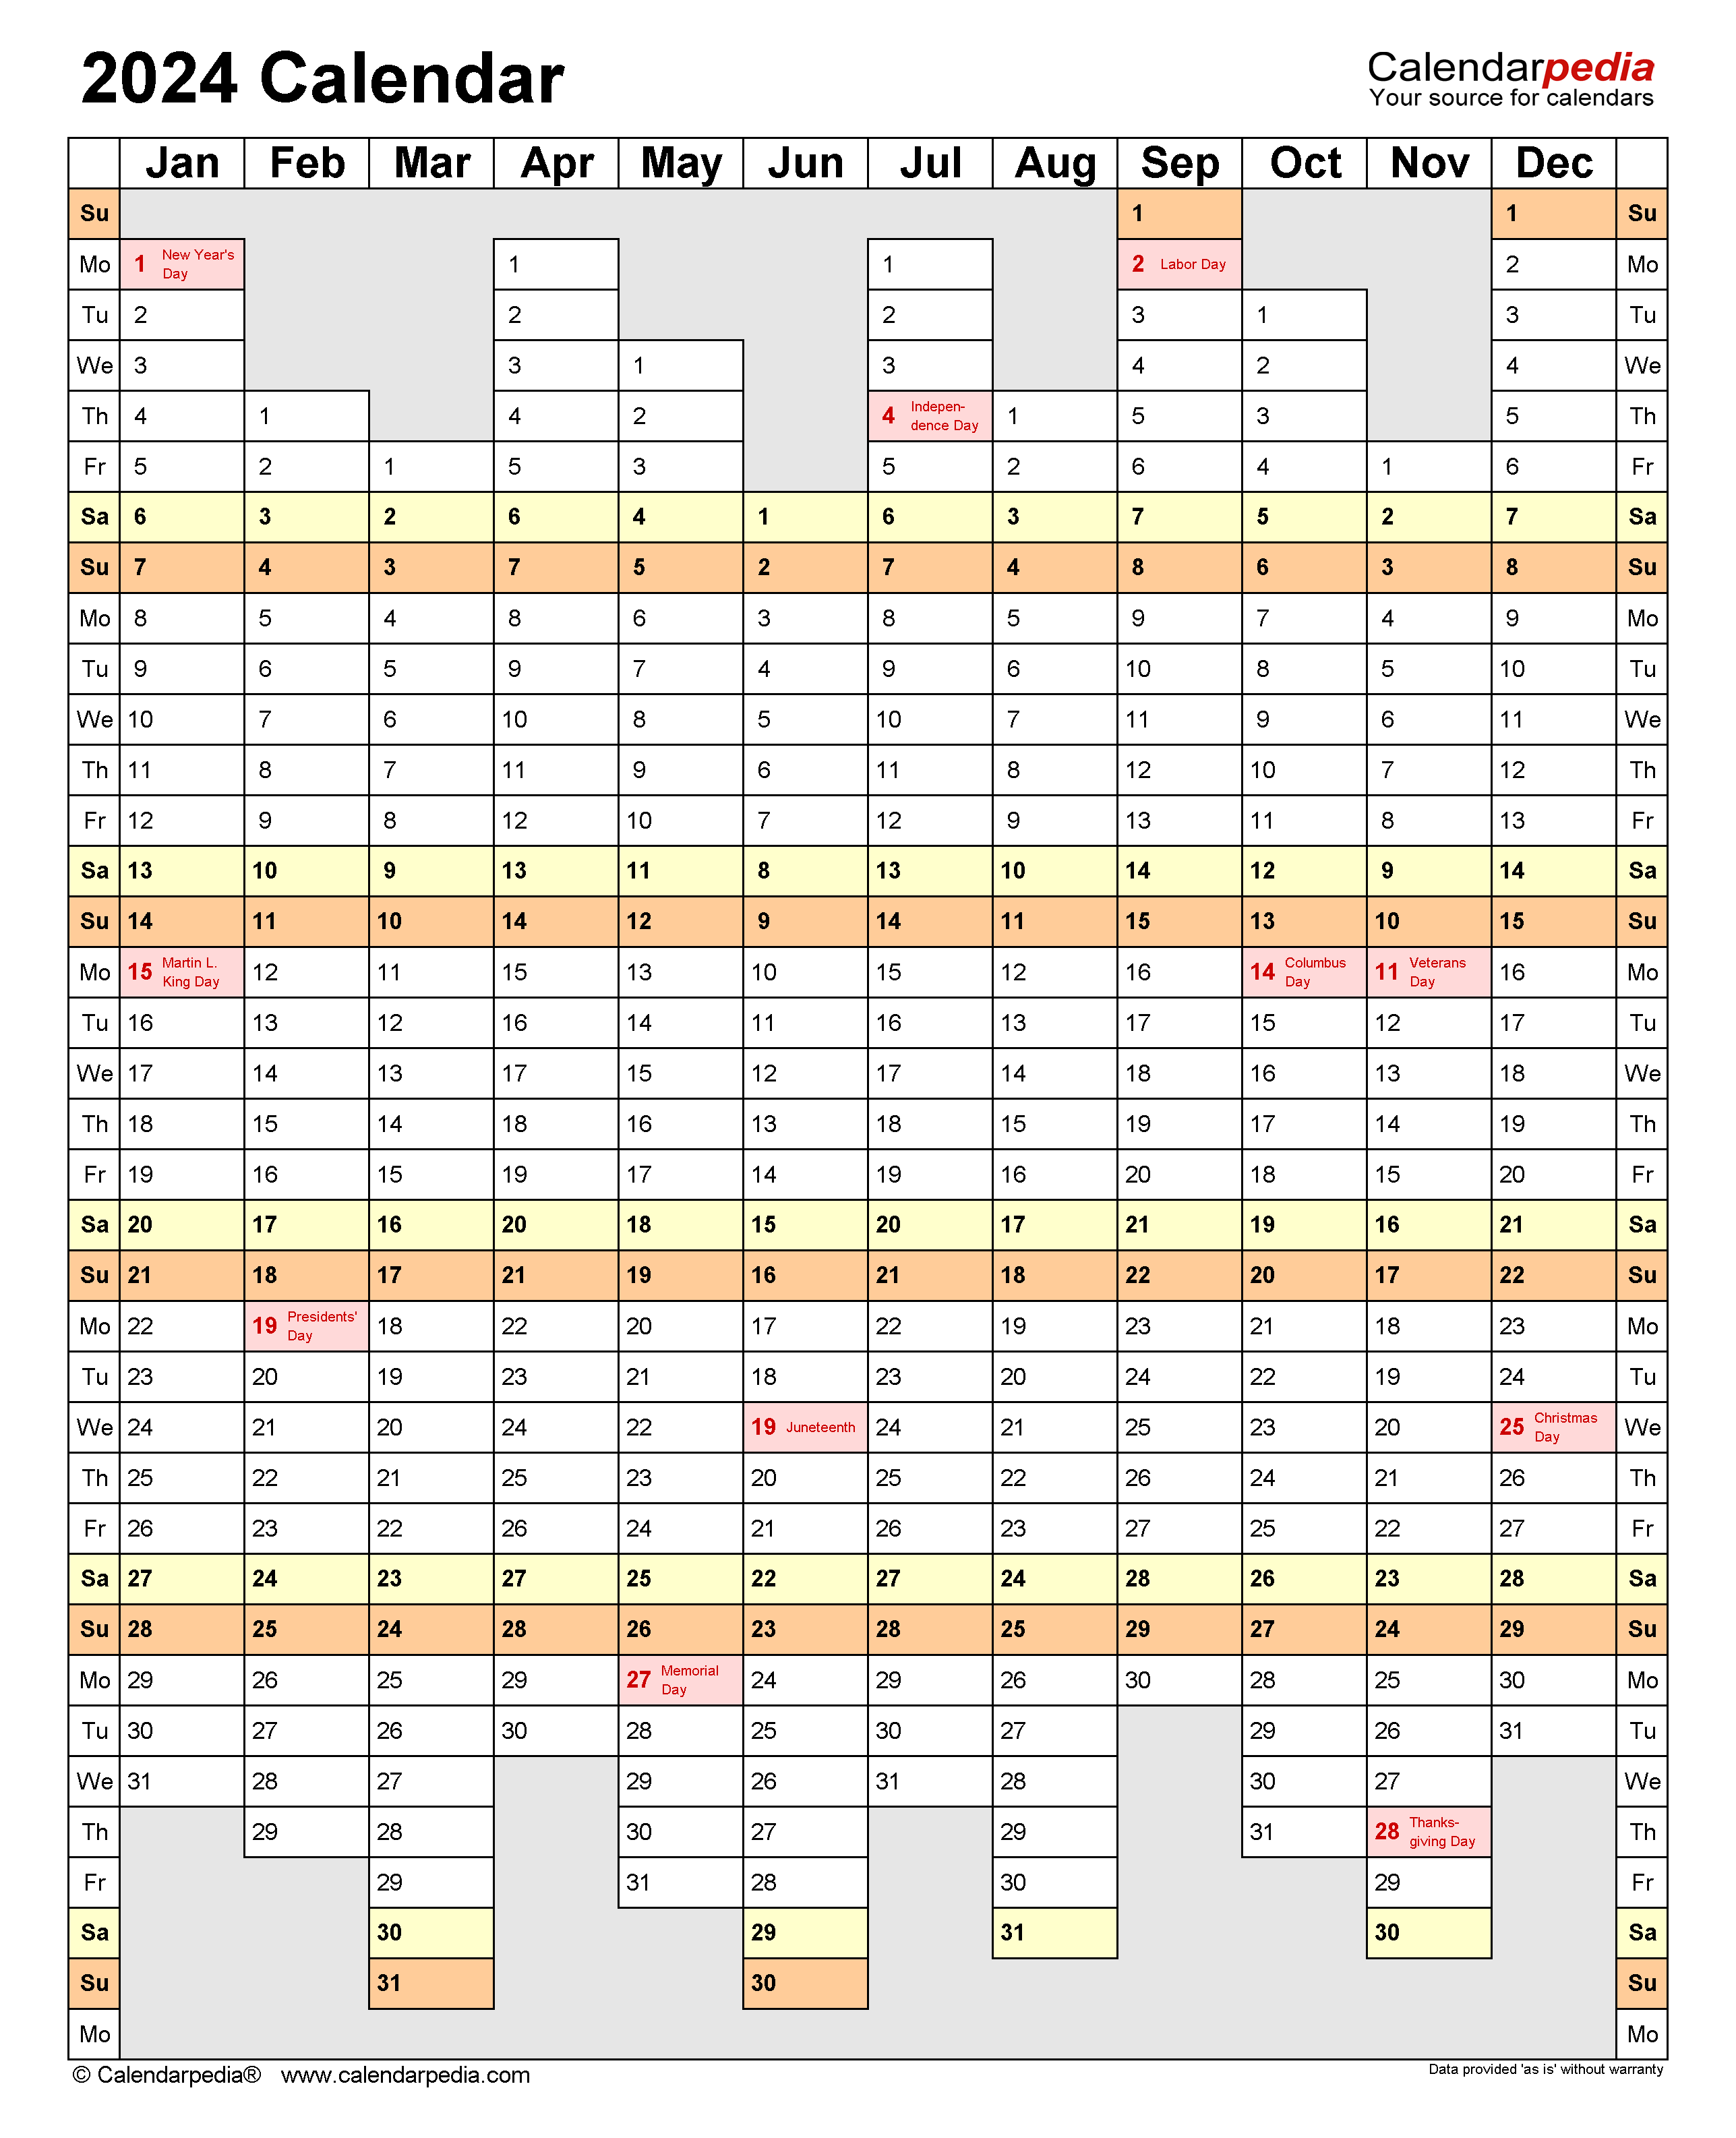 2024 Calendar Template Excel Free Download Calendar 2024 All Holidays - Free Printable Calendar 2024 Excel